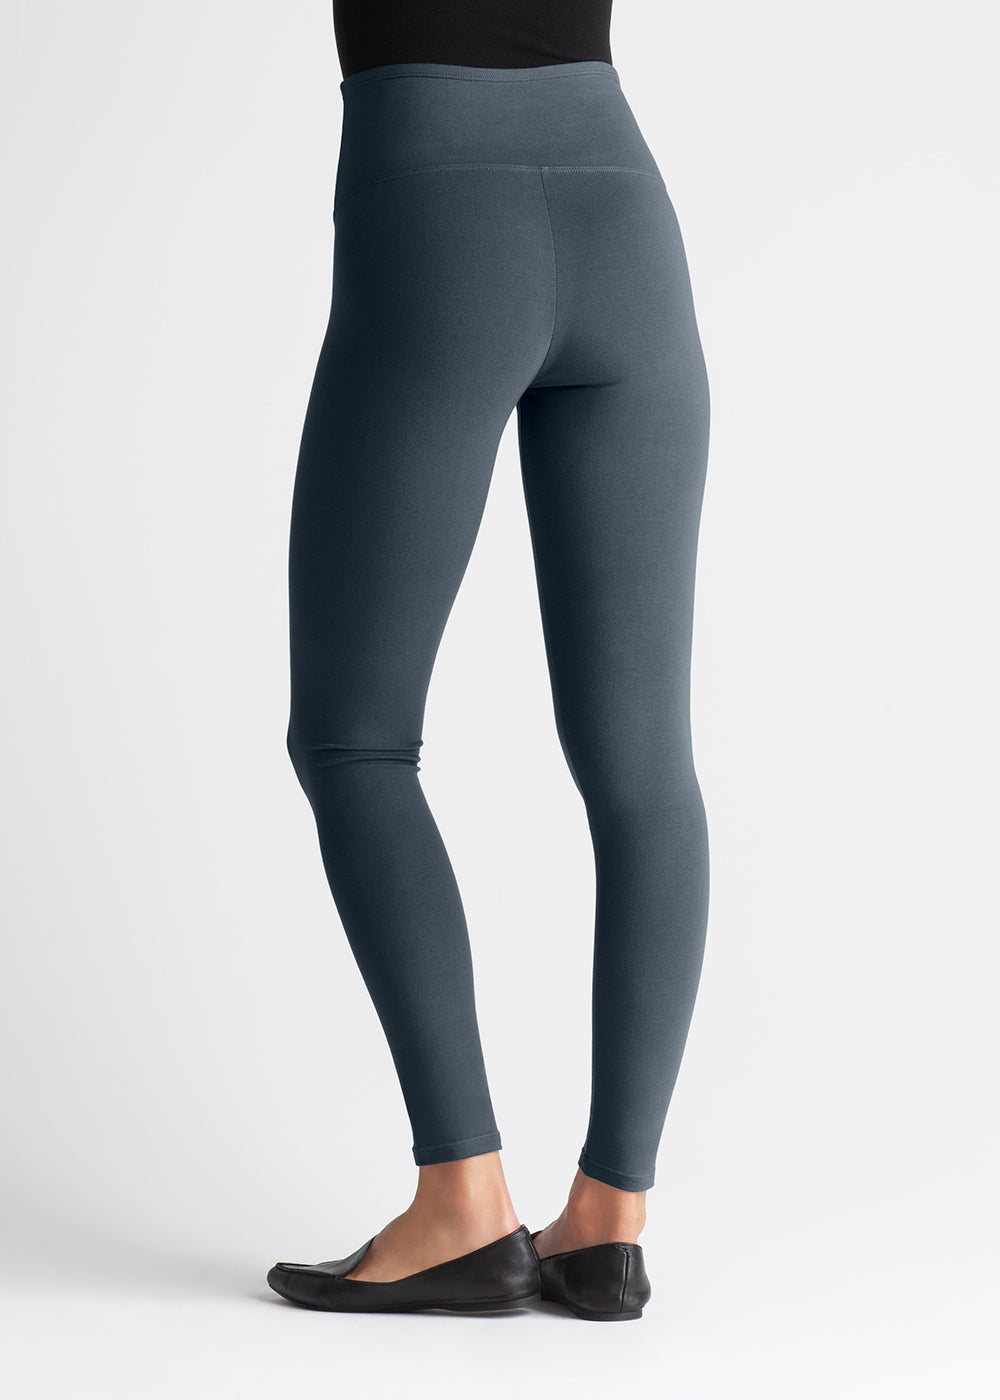 Gap Leggings Women's Large Stretch Striped Charcoal Gray Adults Zipper L